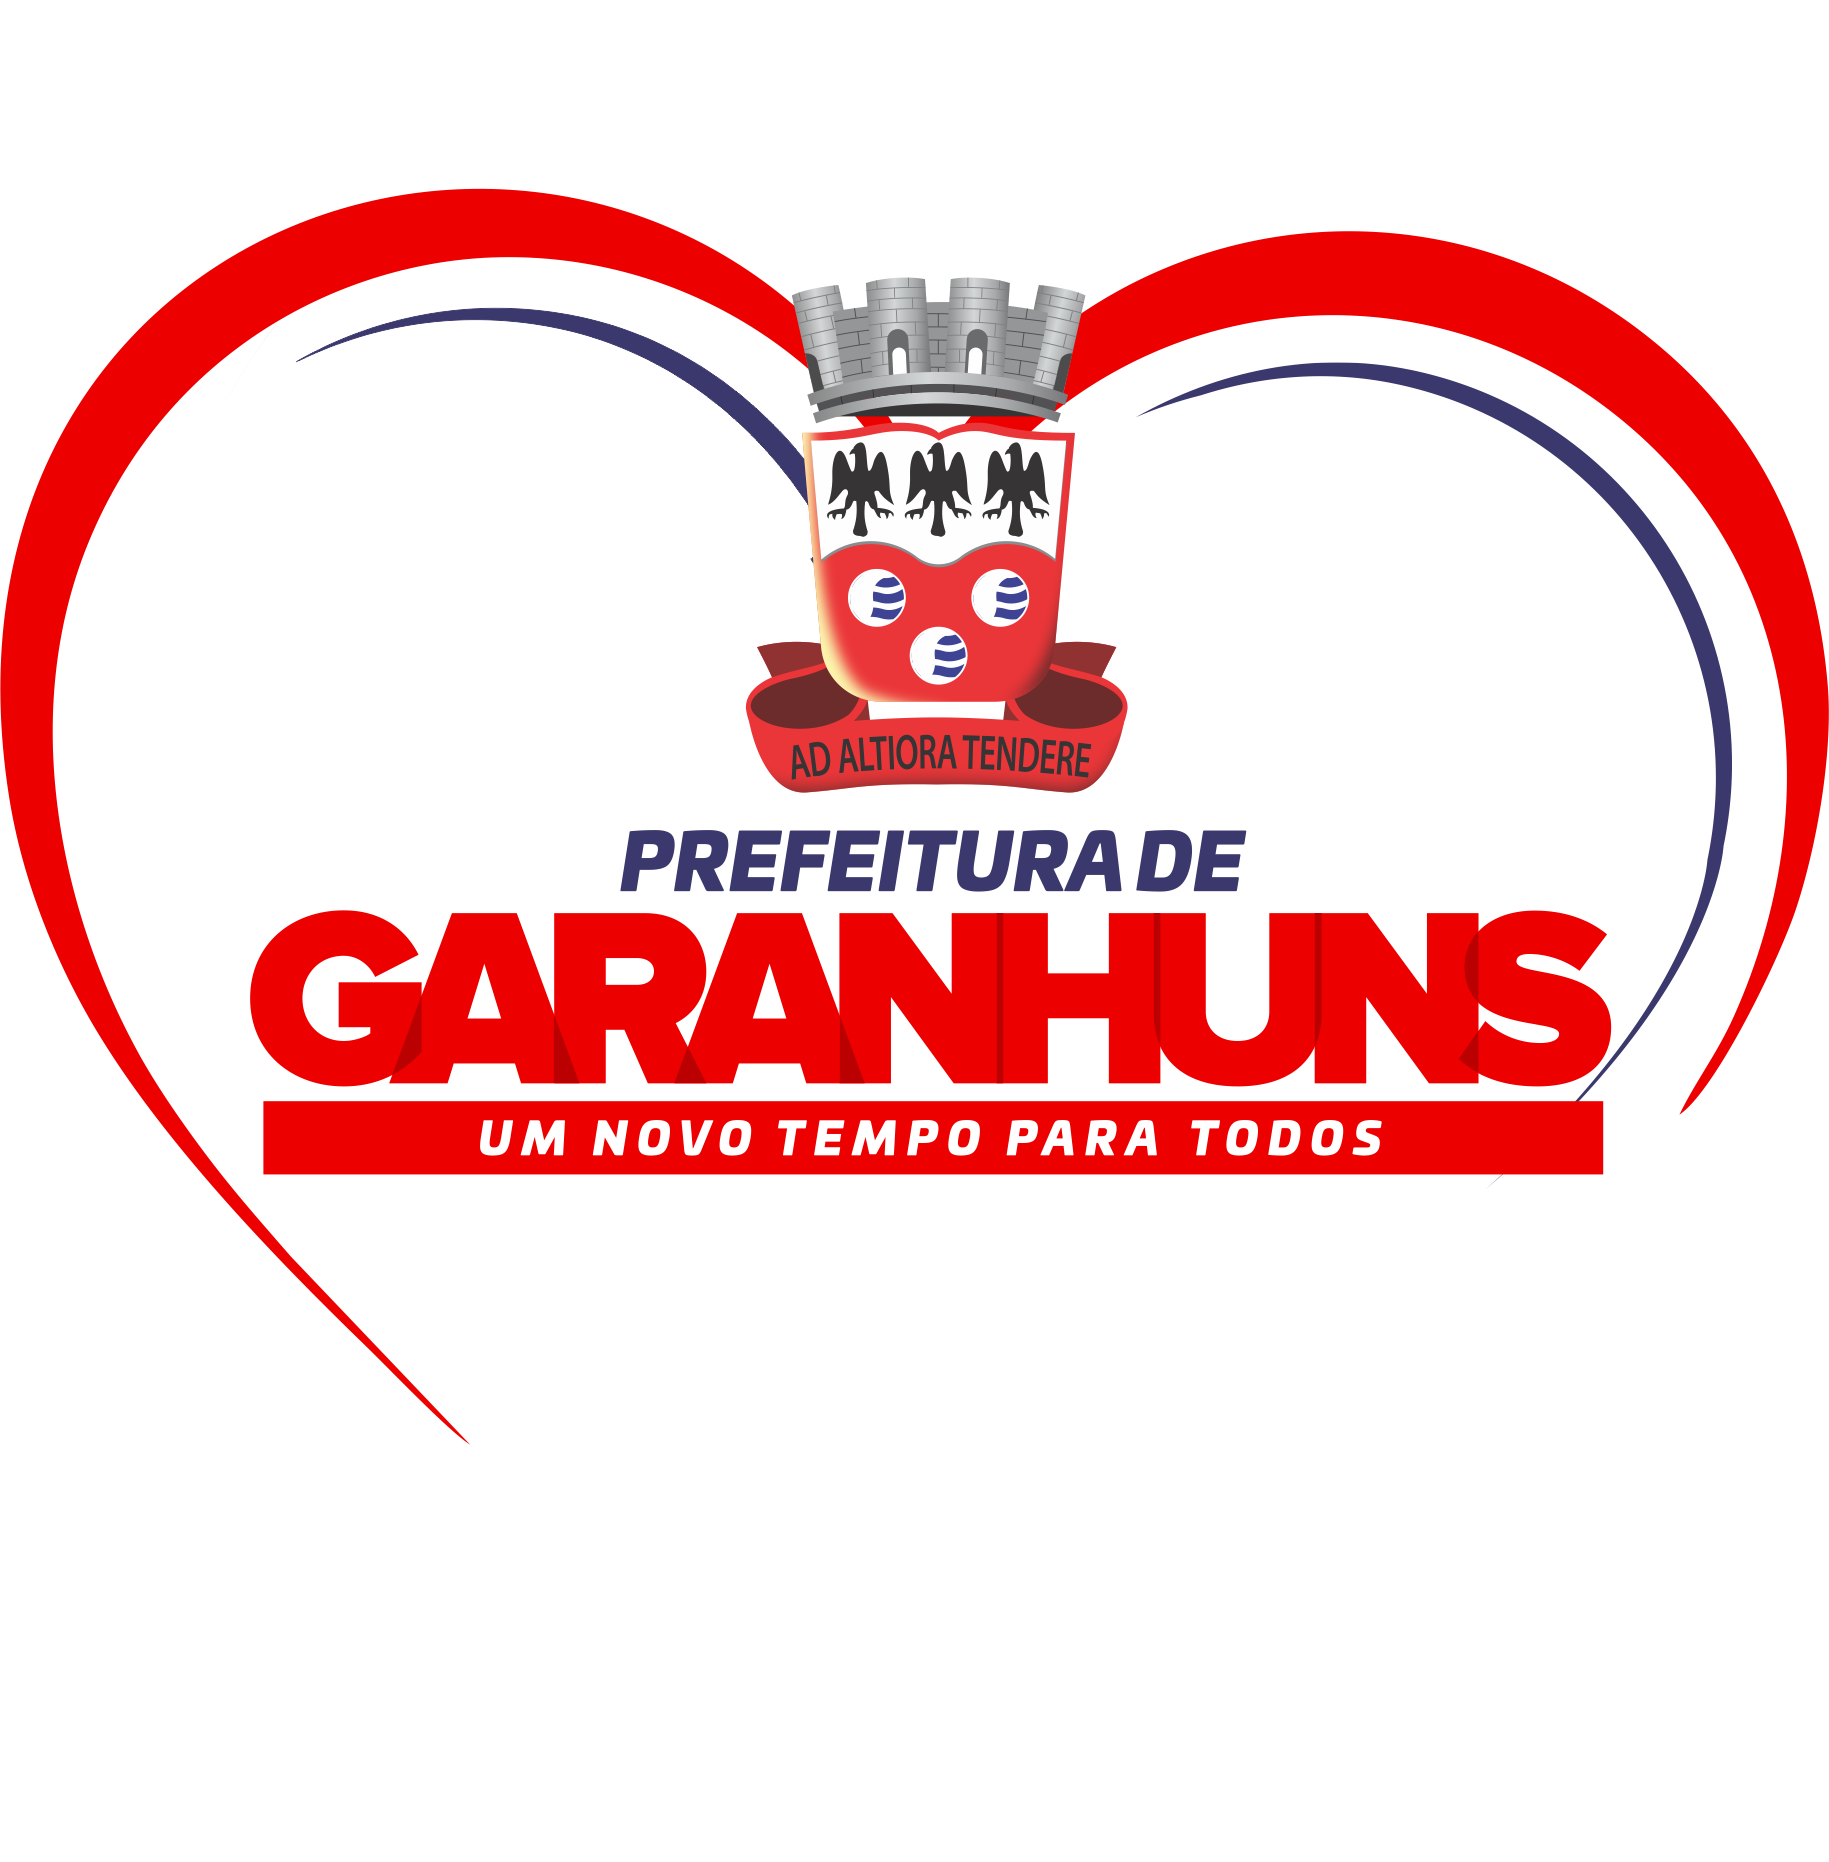 Prefeitura de Garanhuns